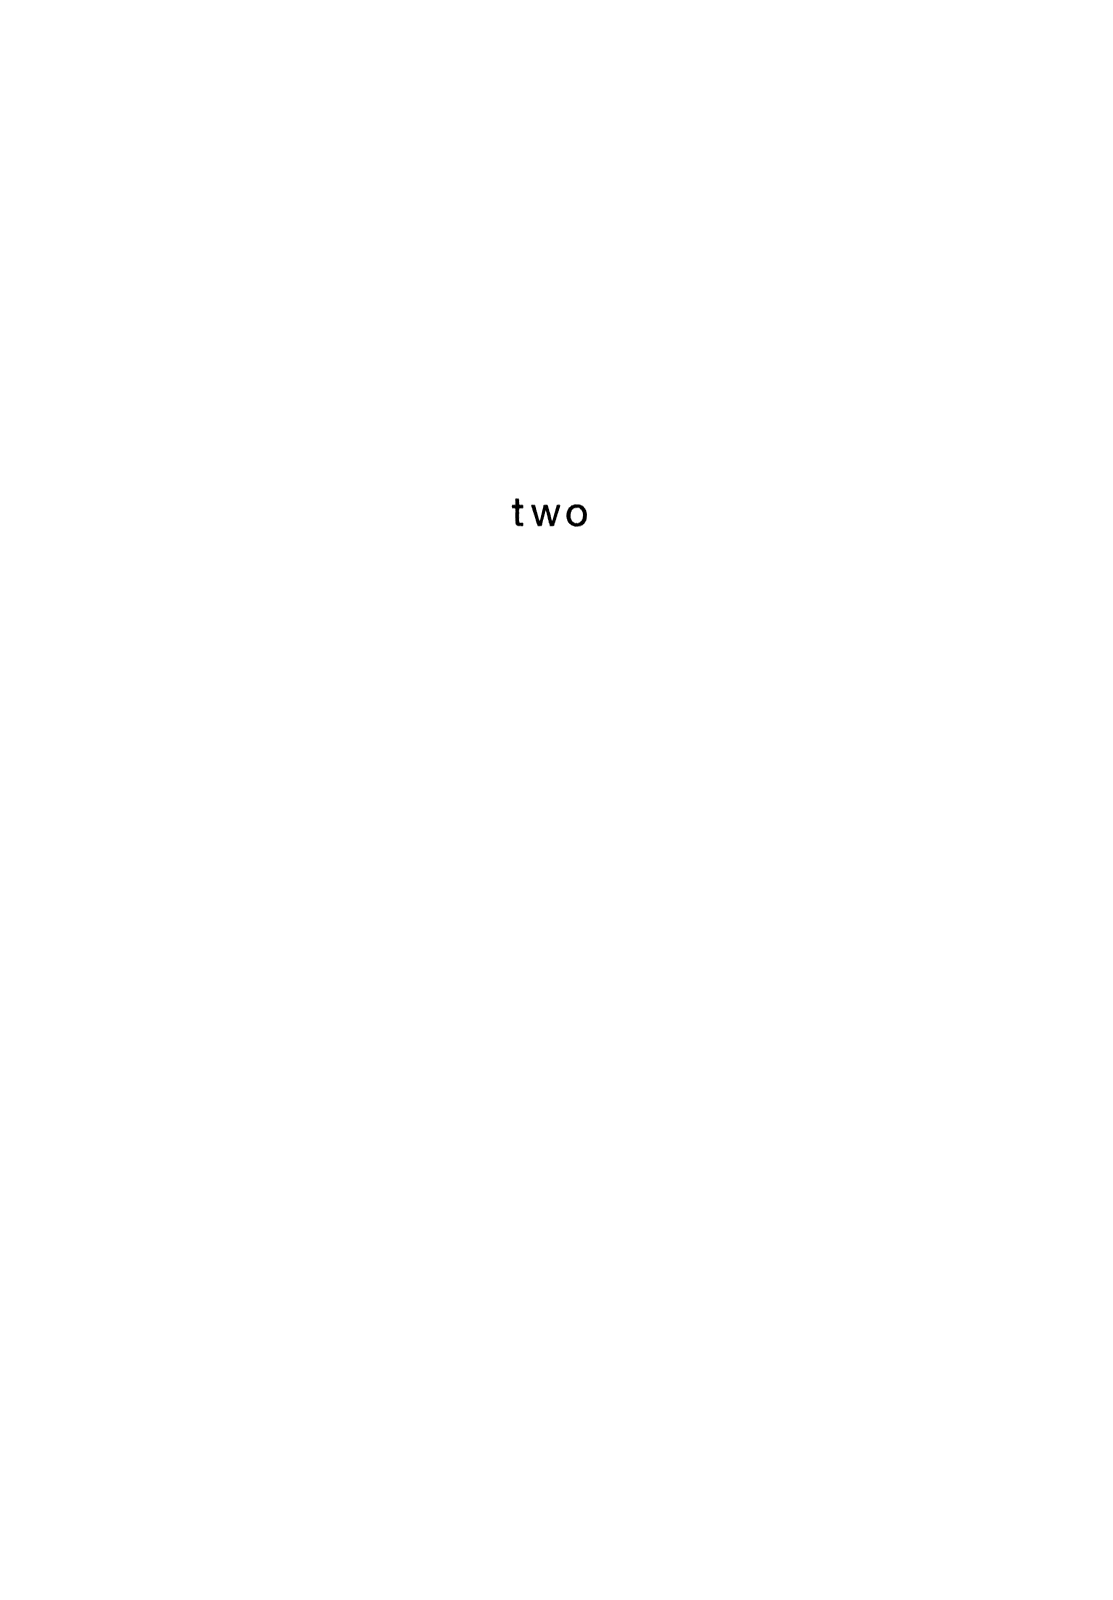 Dainana Joshikai Houkou Vol. 7 Ch. 51.2 Endless Unknown Corridors / two